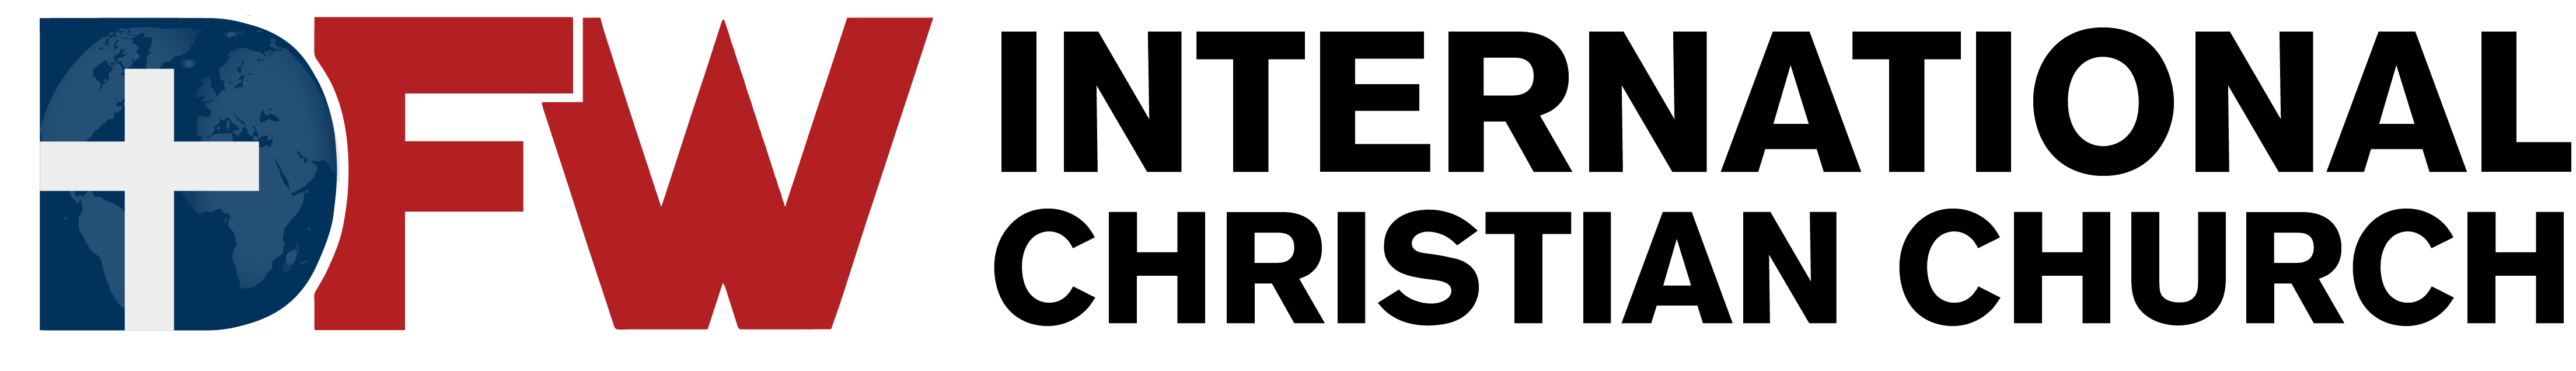 DFW International Christian Church